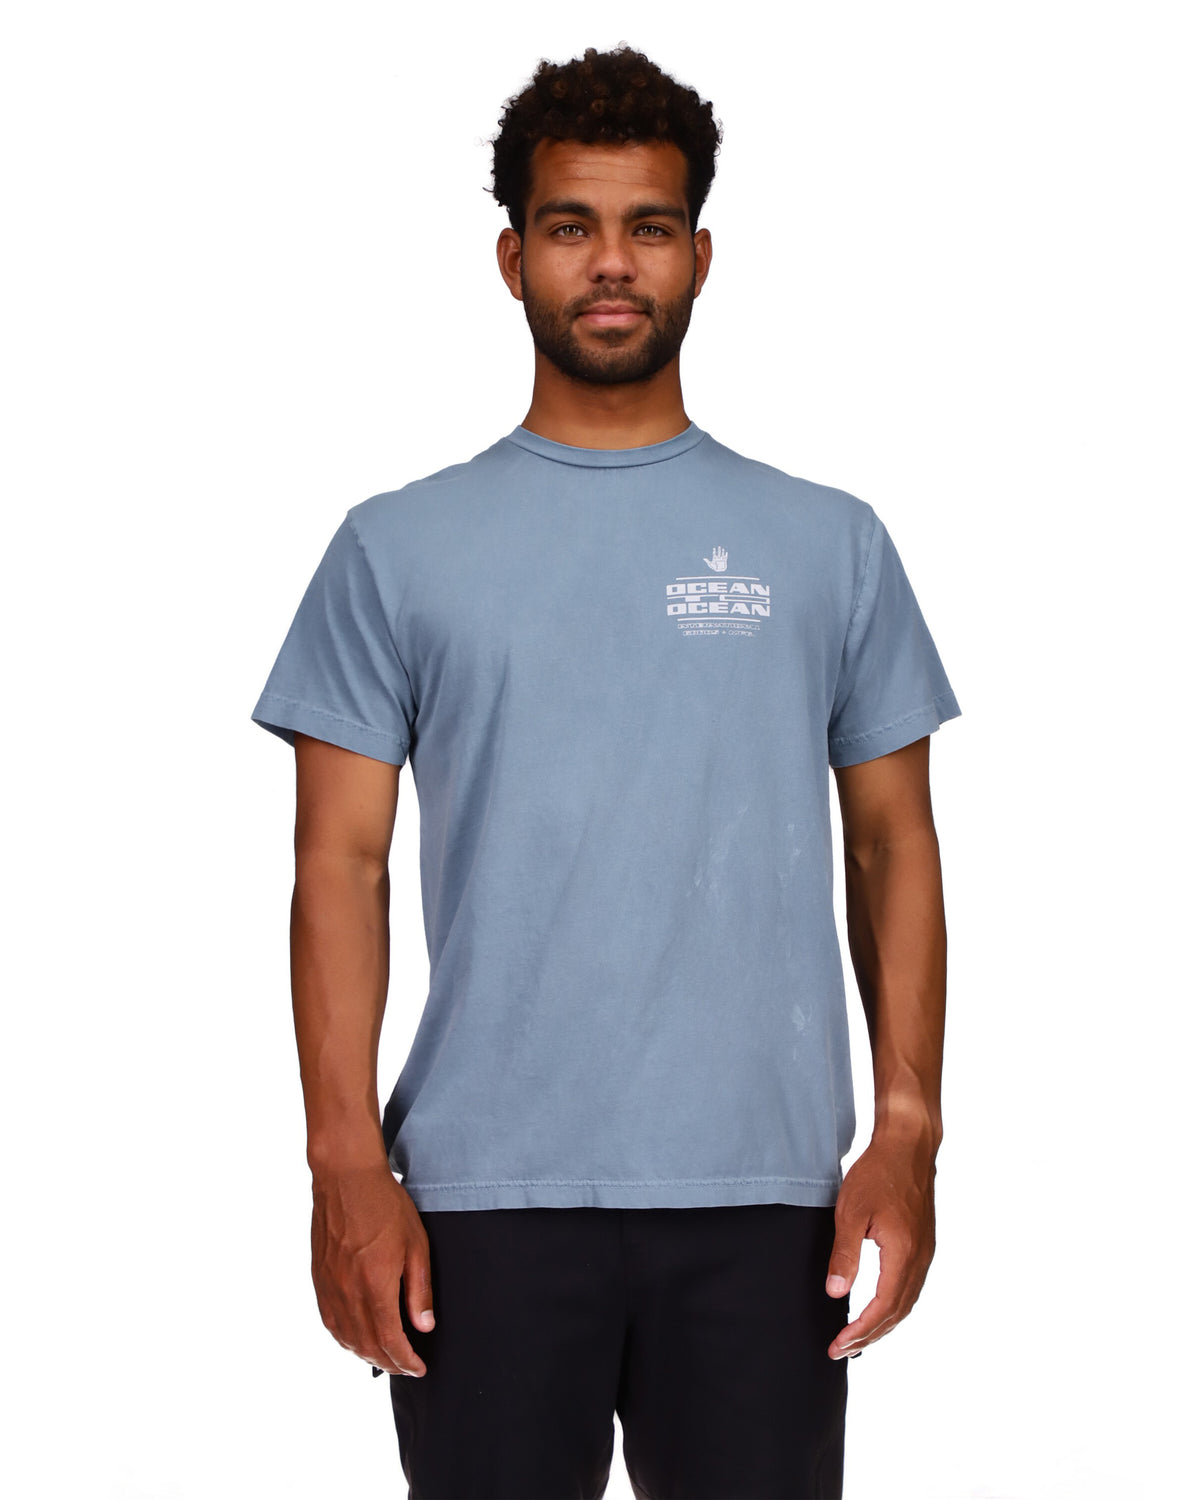 Ocean to Ocean Premium T-Shirt - Pigment Dusk - Body Glove